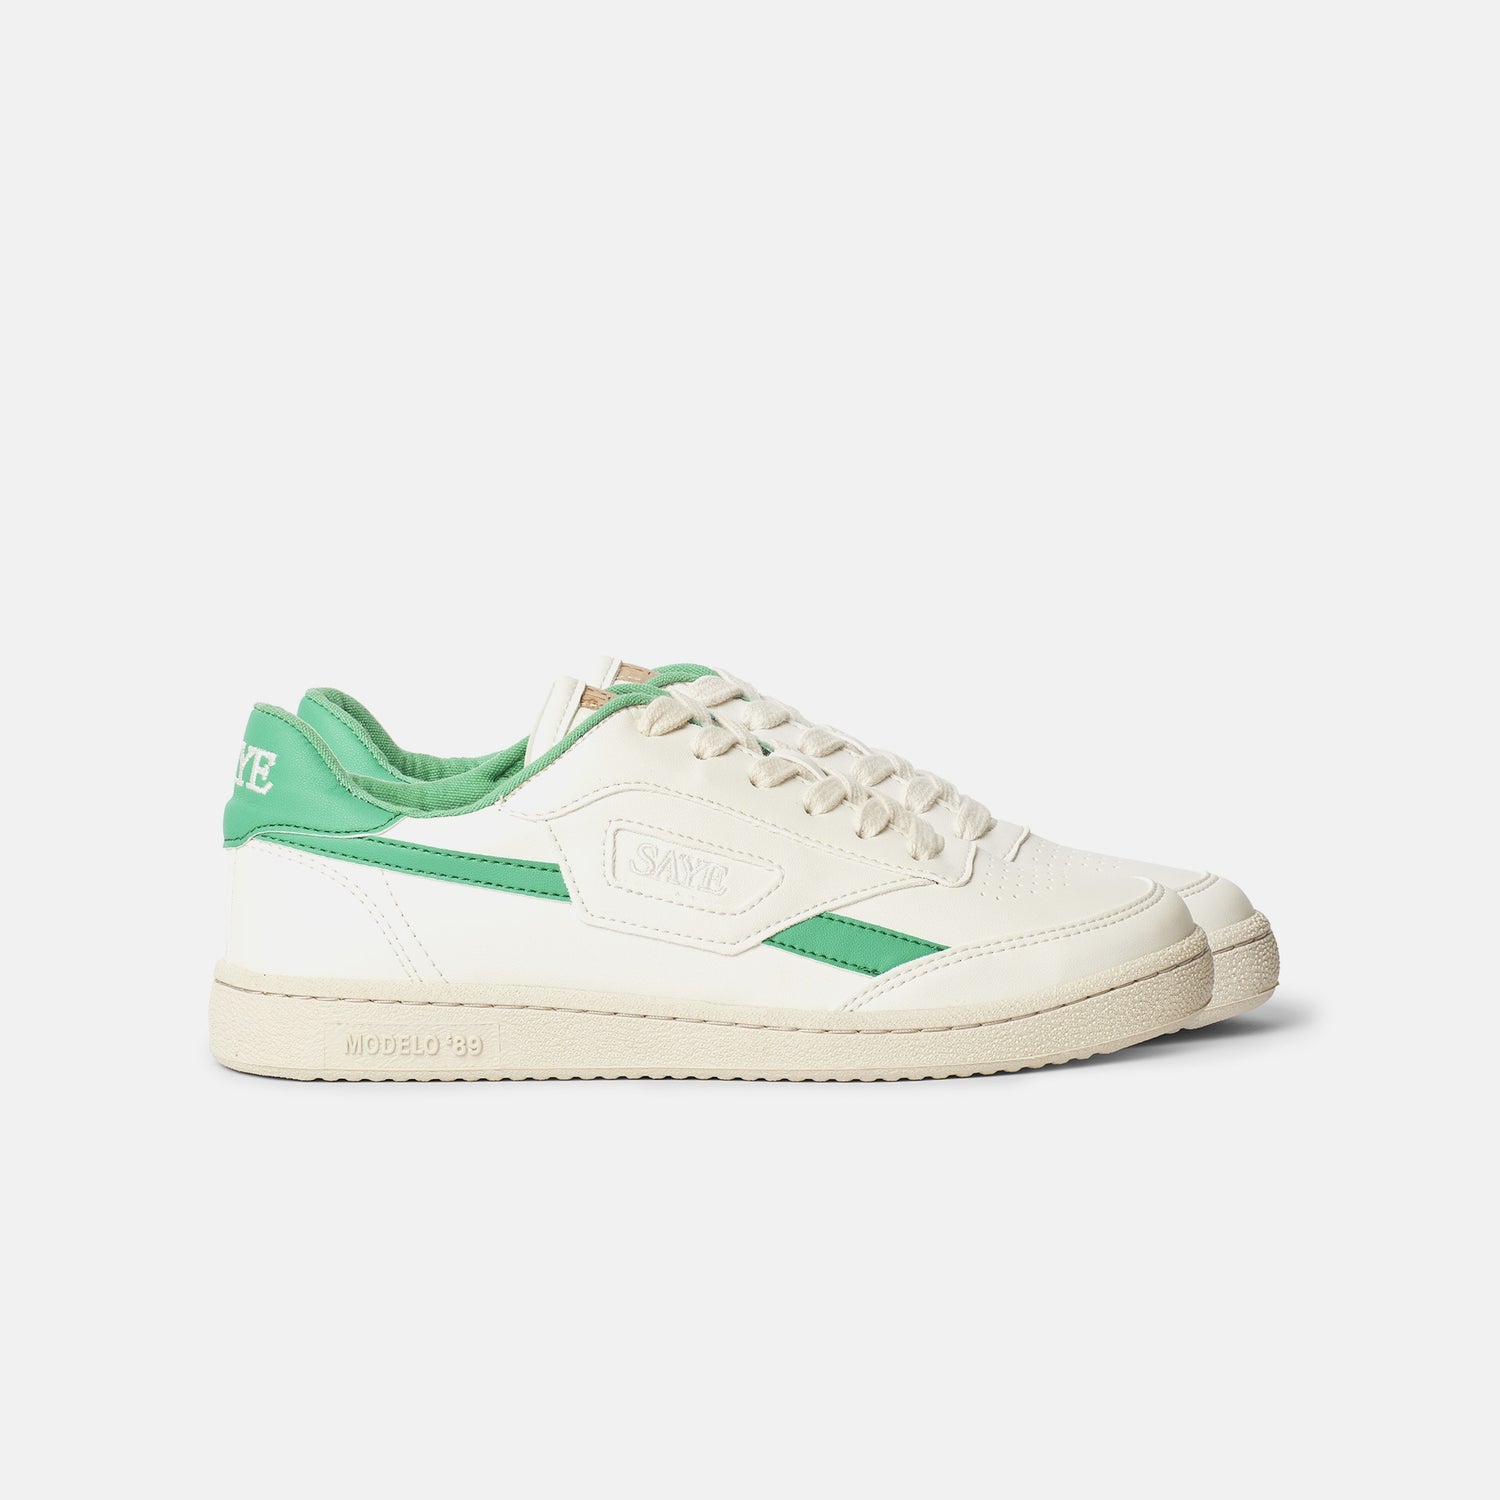 A pair of SAYE Modelo '89 Sneakers - Green with vegan Napa materials.